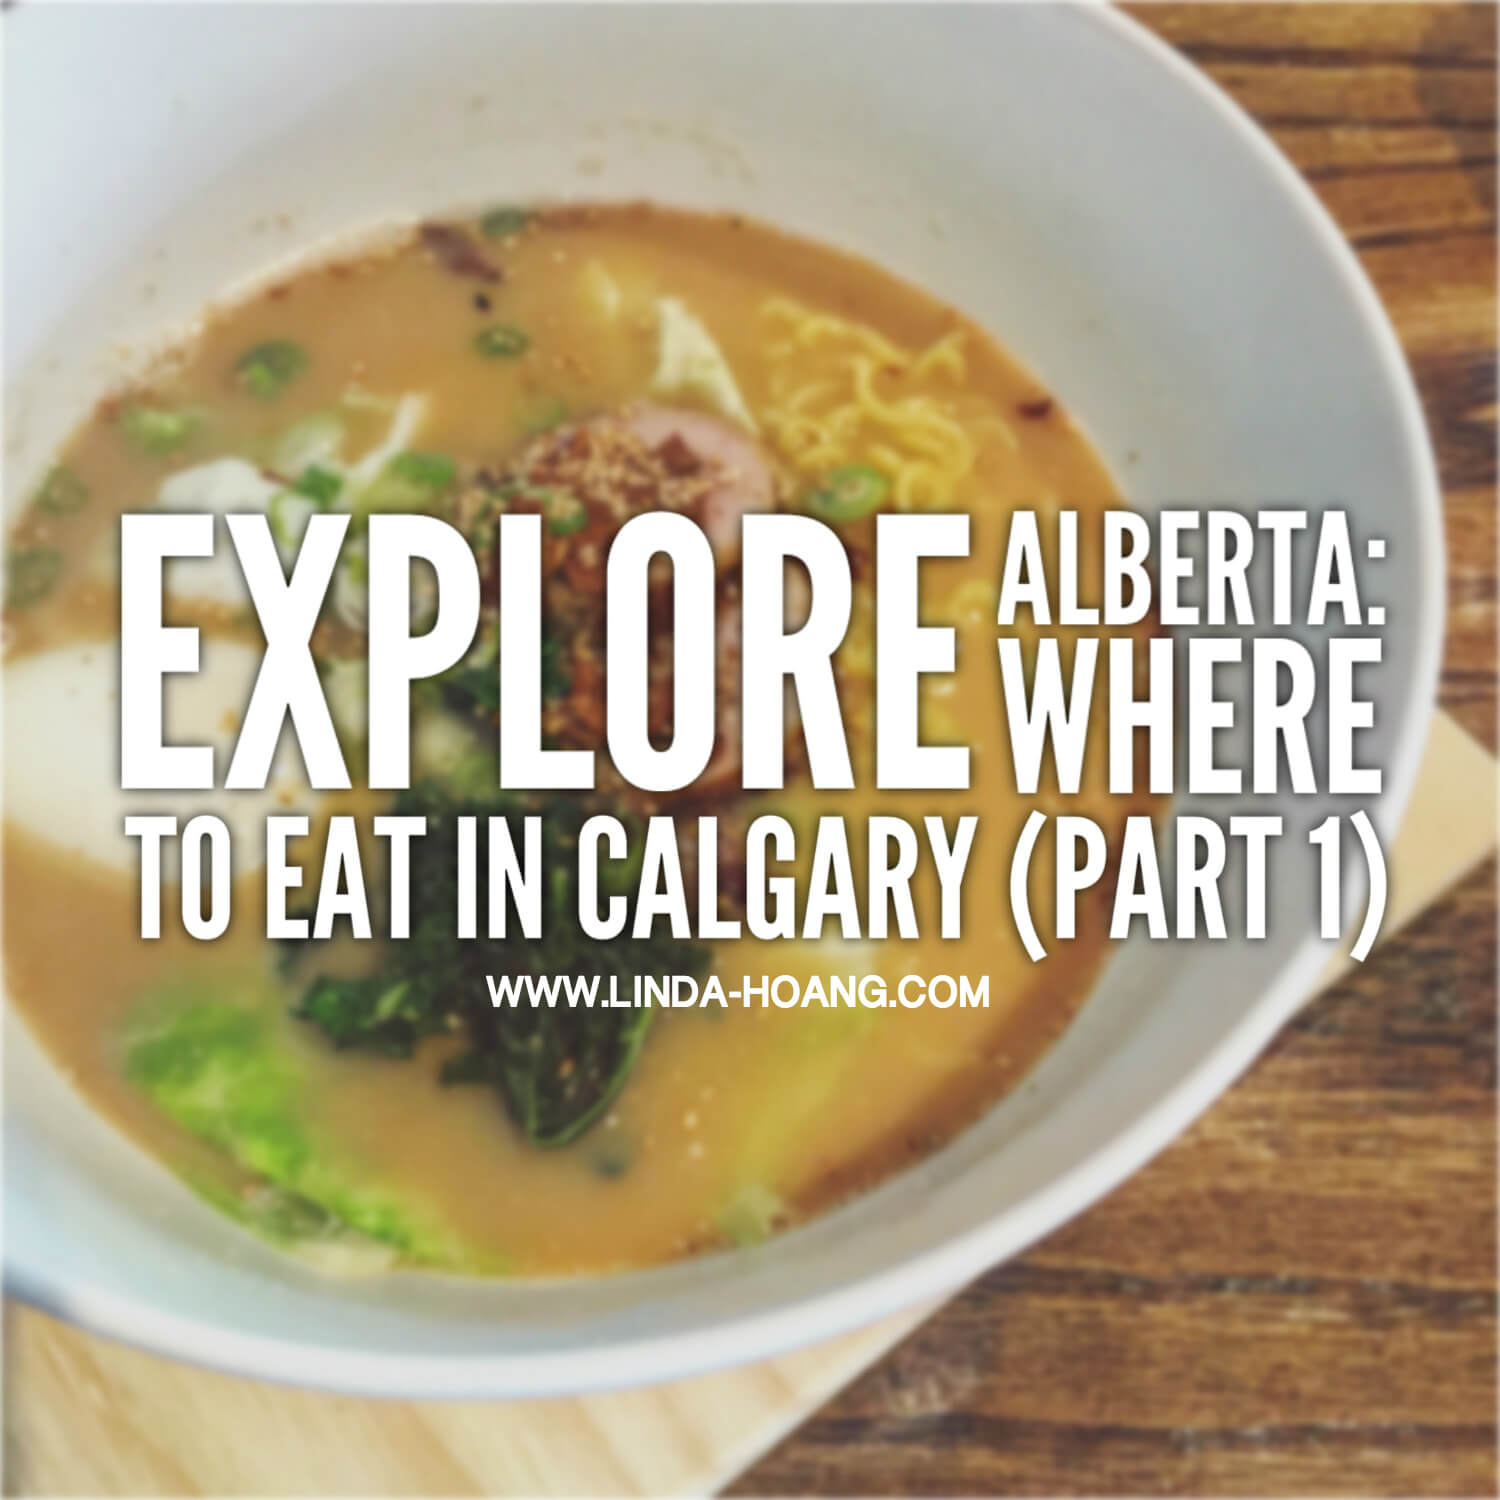 Explore Alberta - Where to eat in Calgary